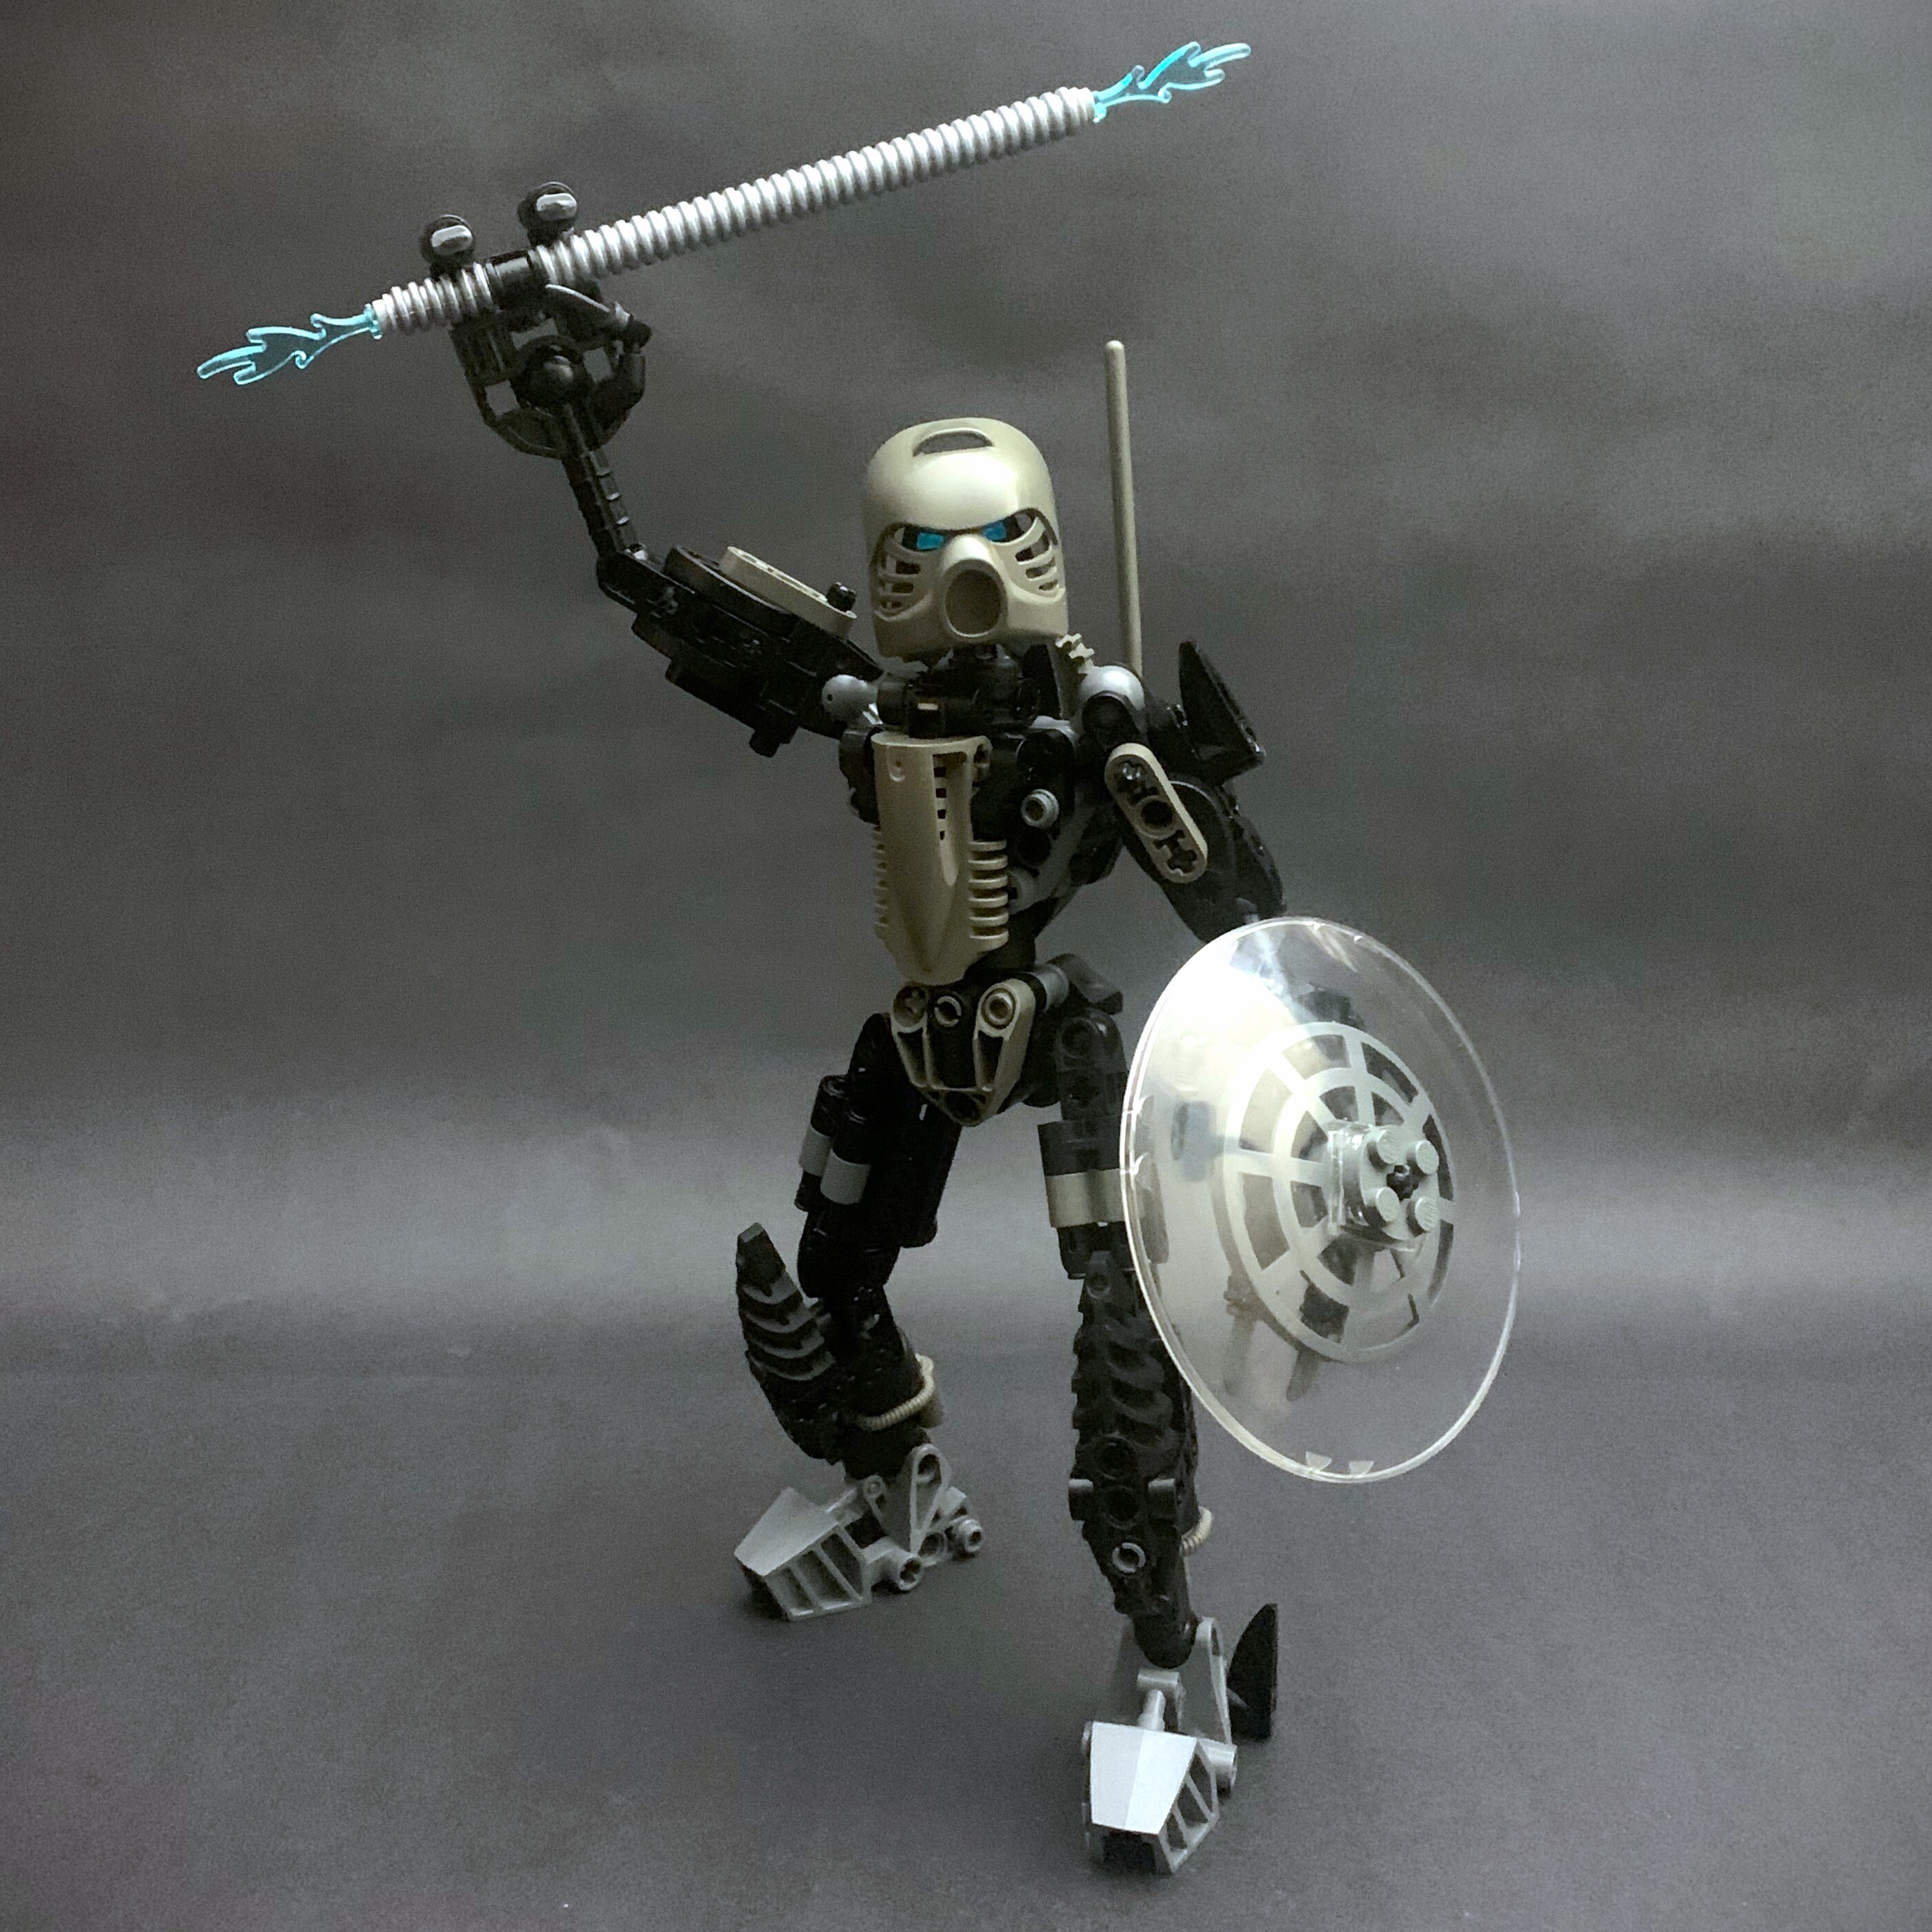 Quartz Wanduhr mit Lego Bionicle Motiv 